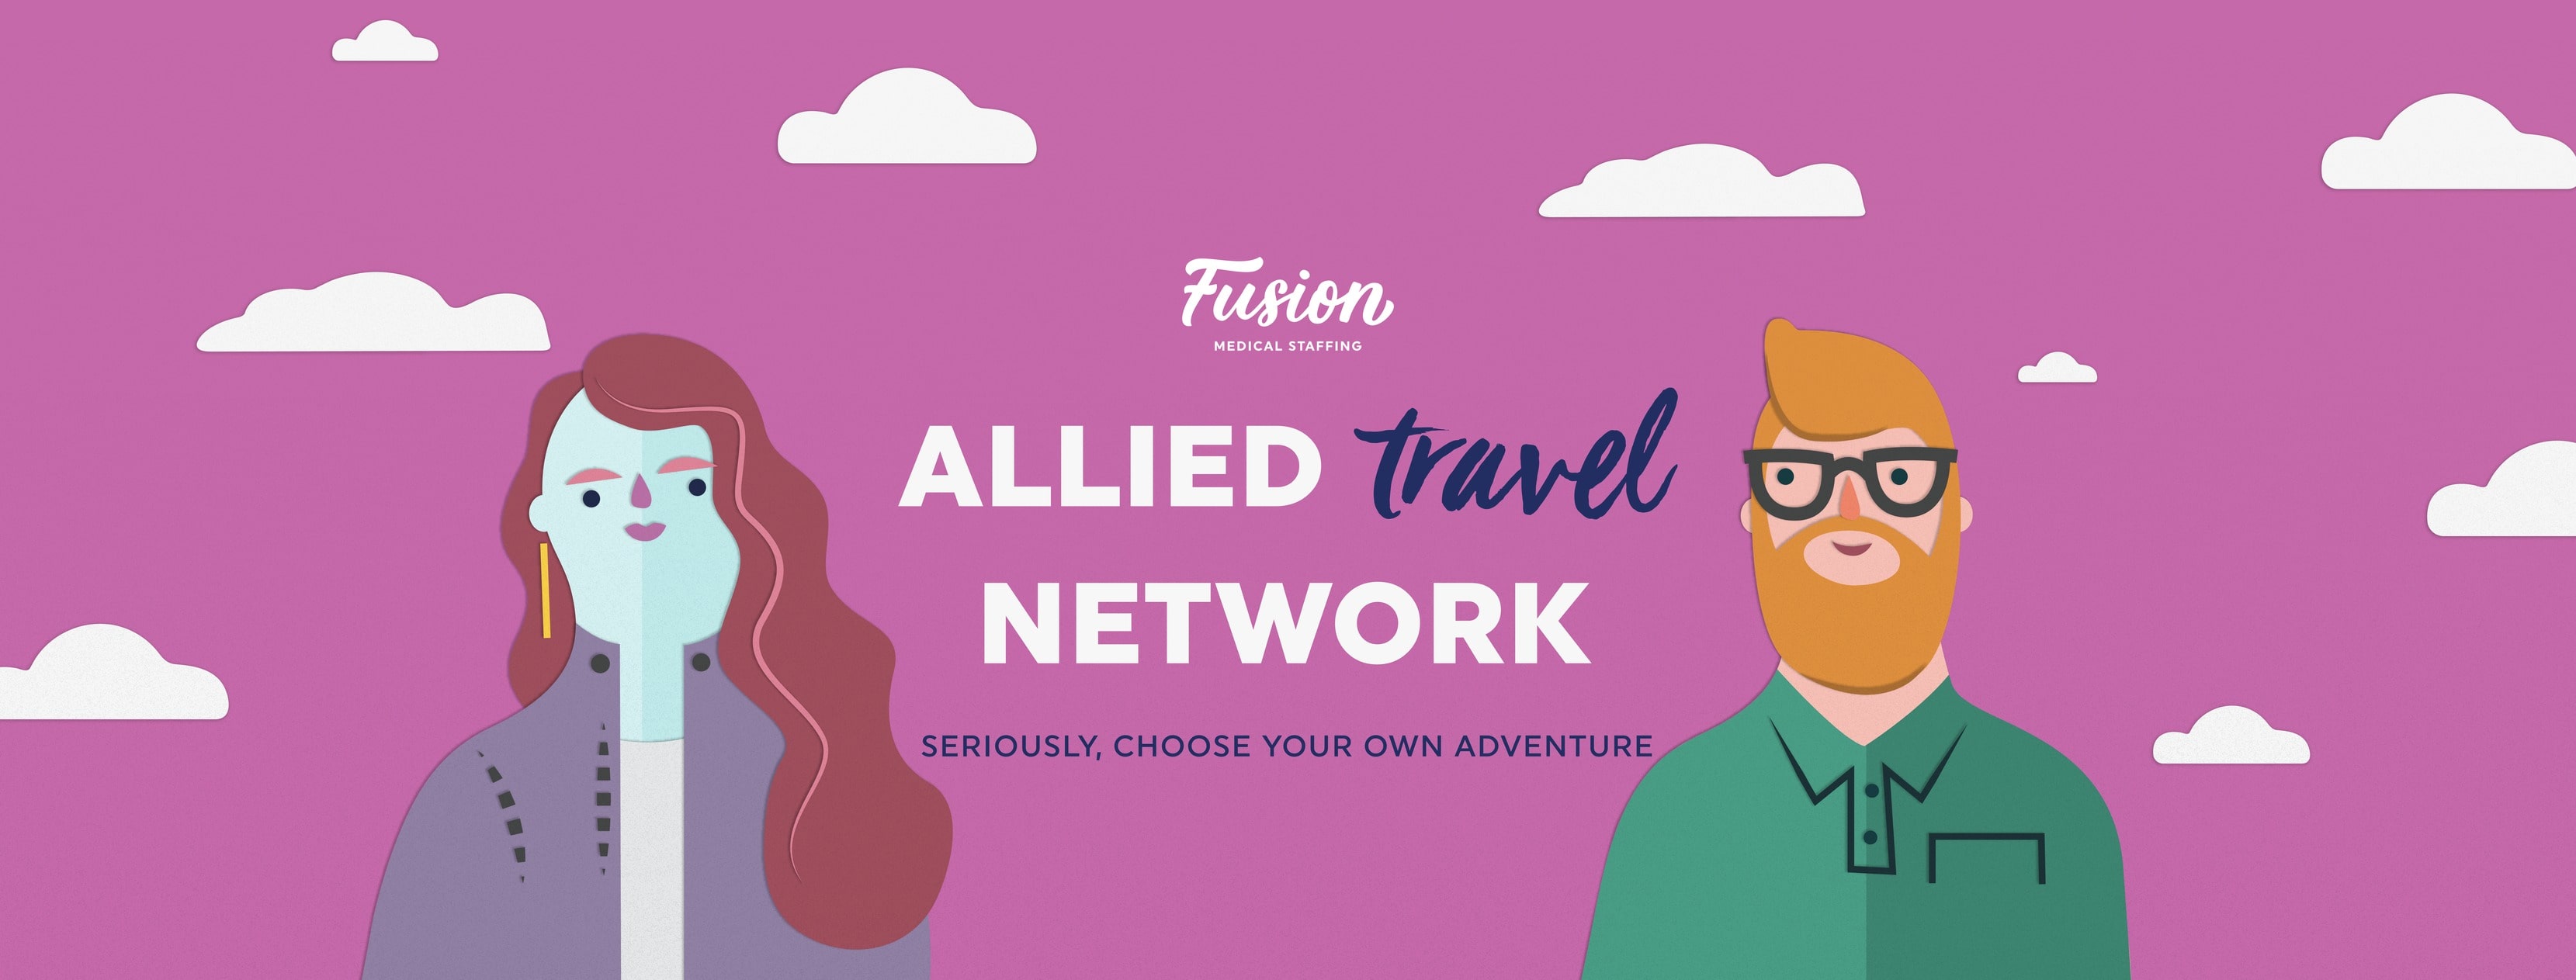 Allied travel network-min